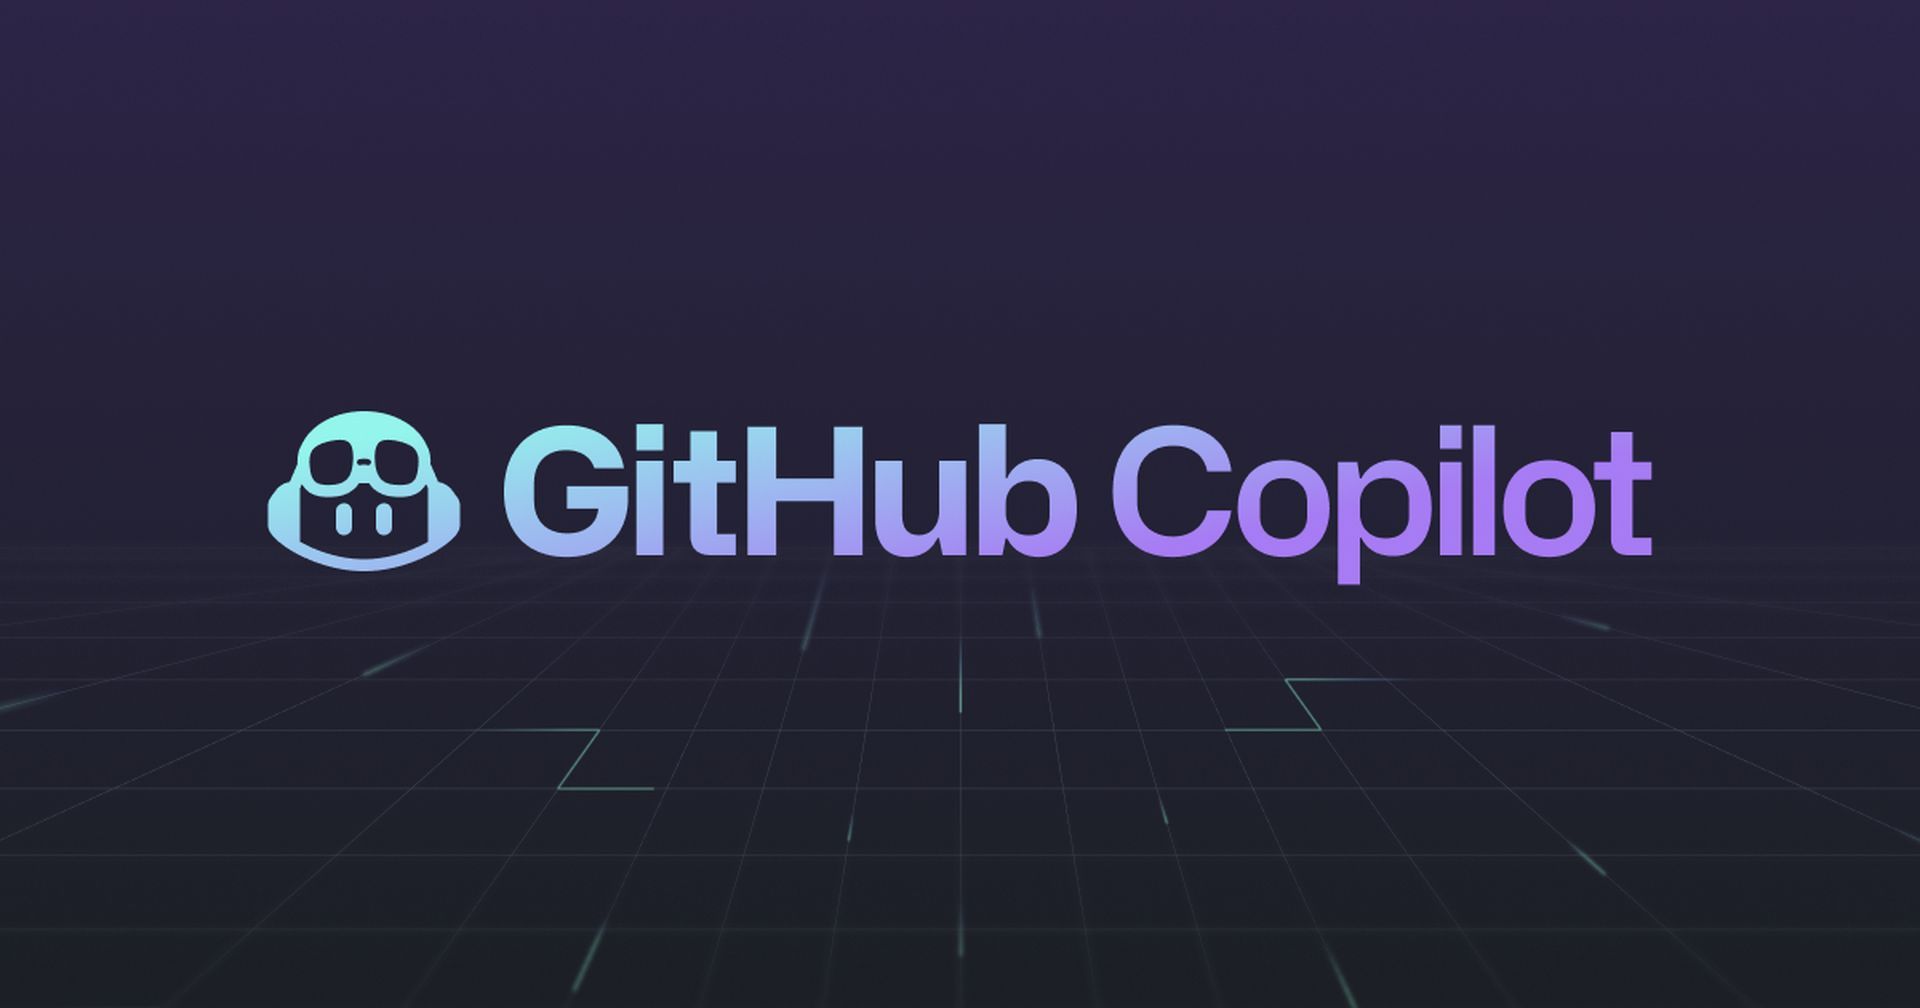 GitHub Copilot vs ChatGPT: Full comparison